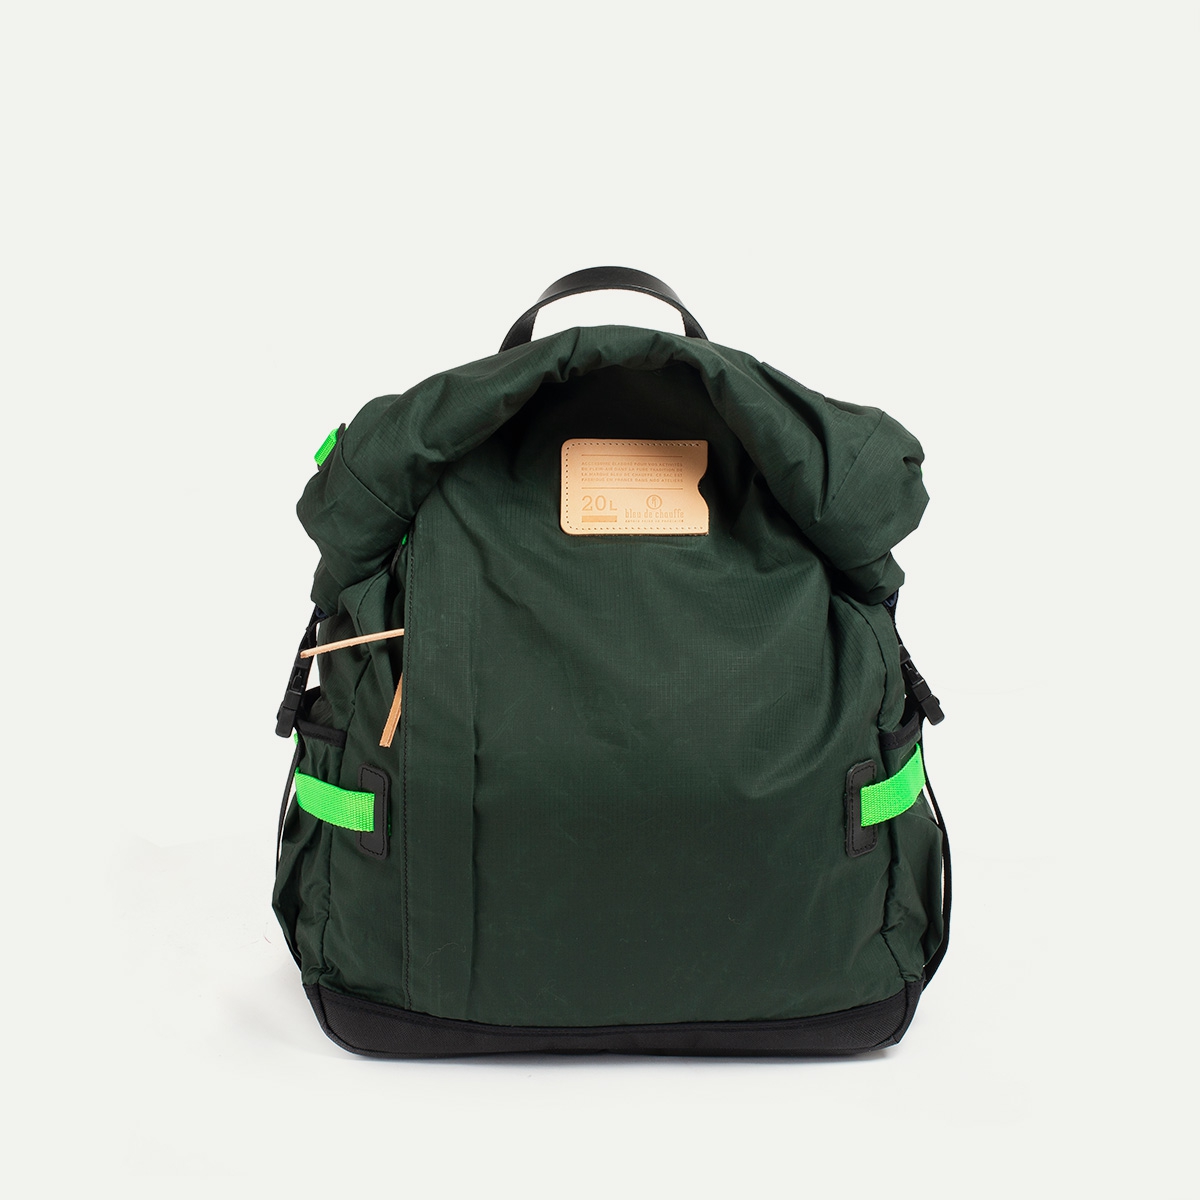 20L Basile Backpack - khaki Neon (image n°1)